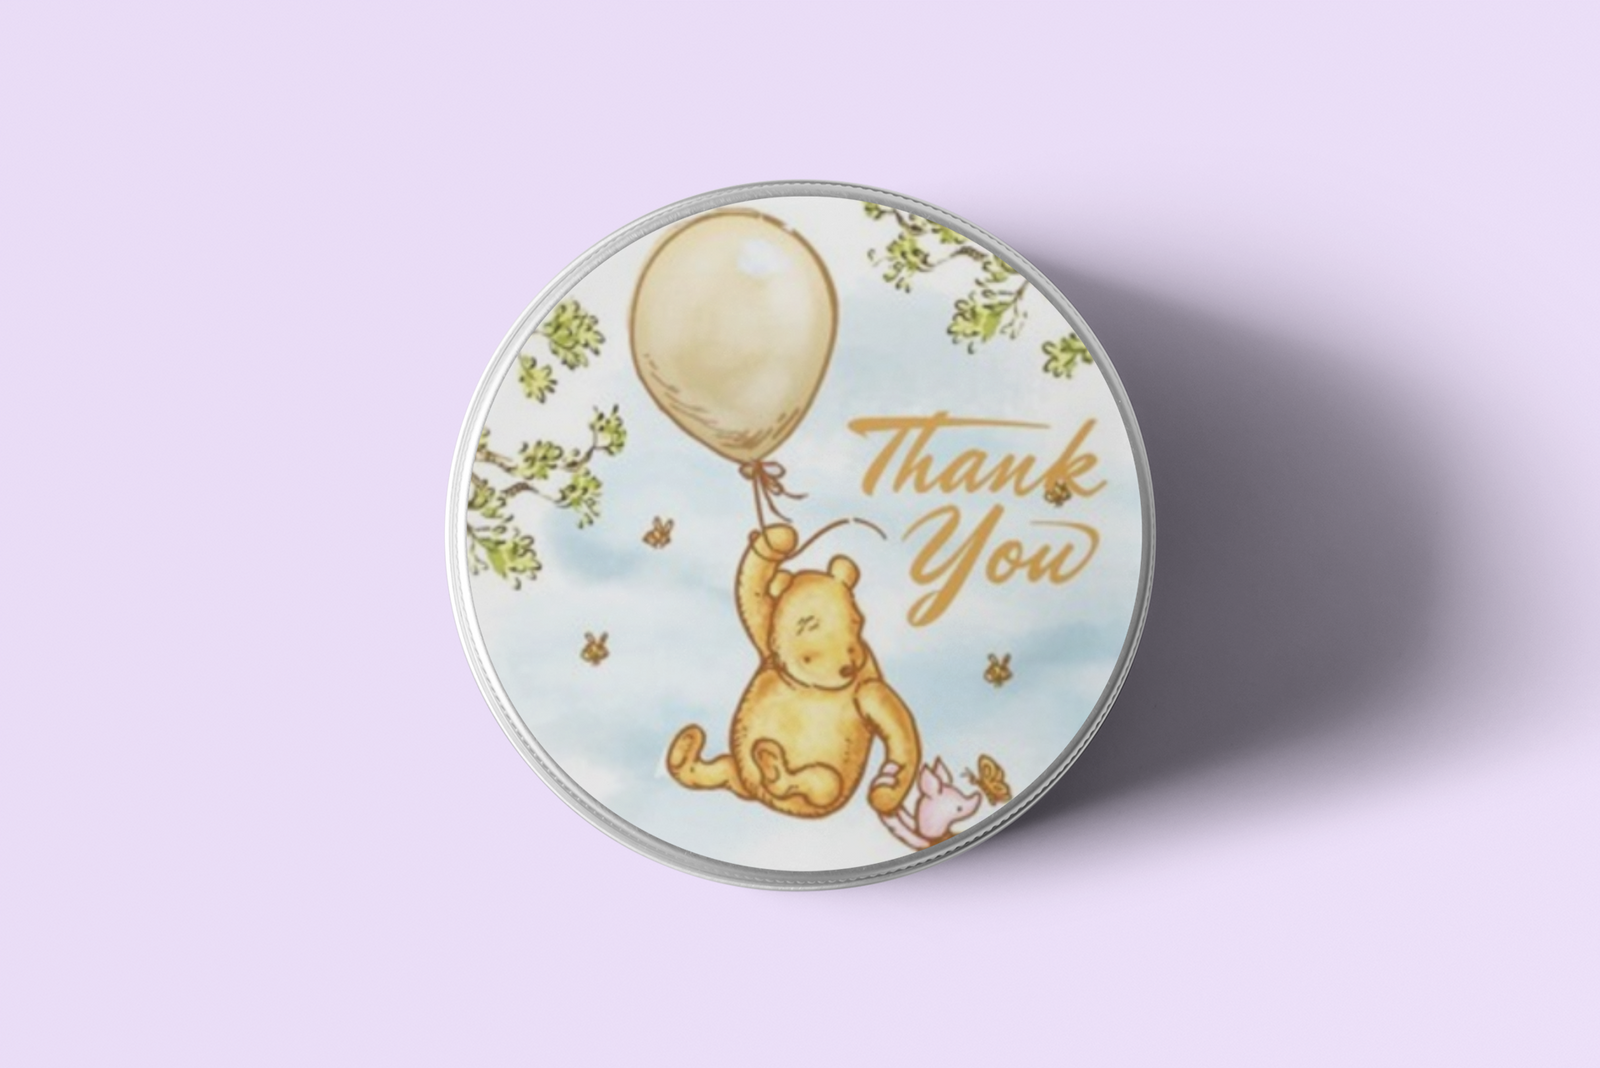 Winnie The Pooh Theme- Return Gift/birthday decor Thankyou Sticker (6 CM/Sticker/Multicolour/24Pcs)